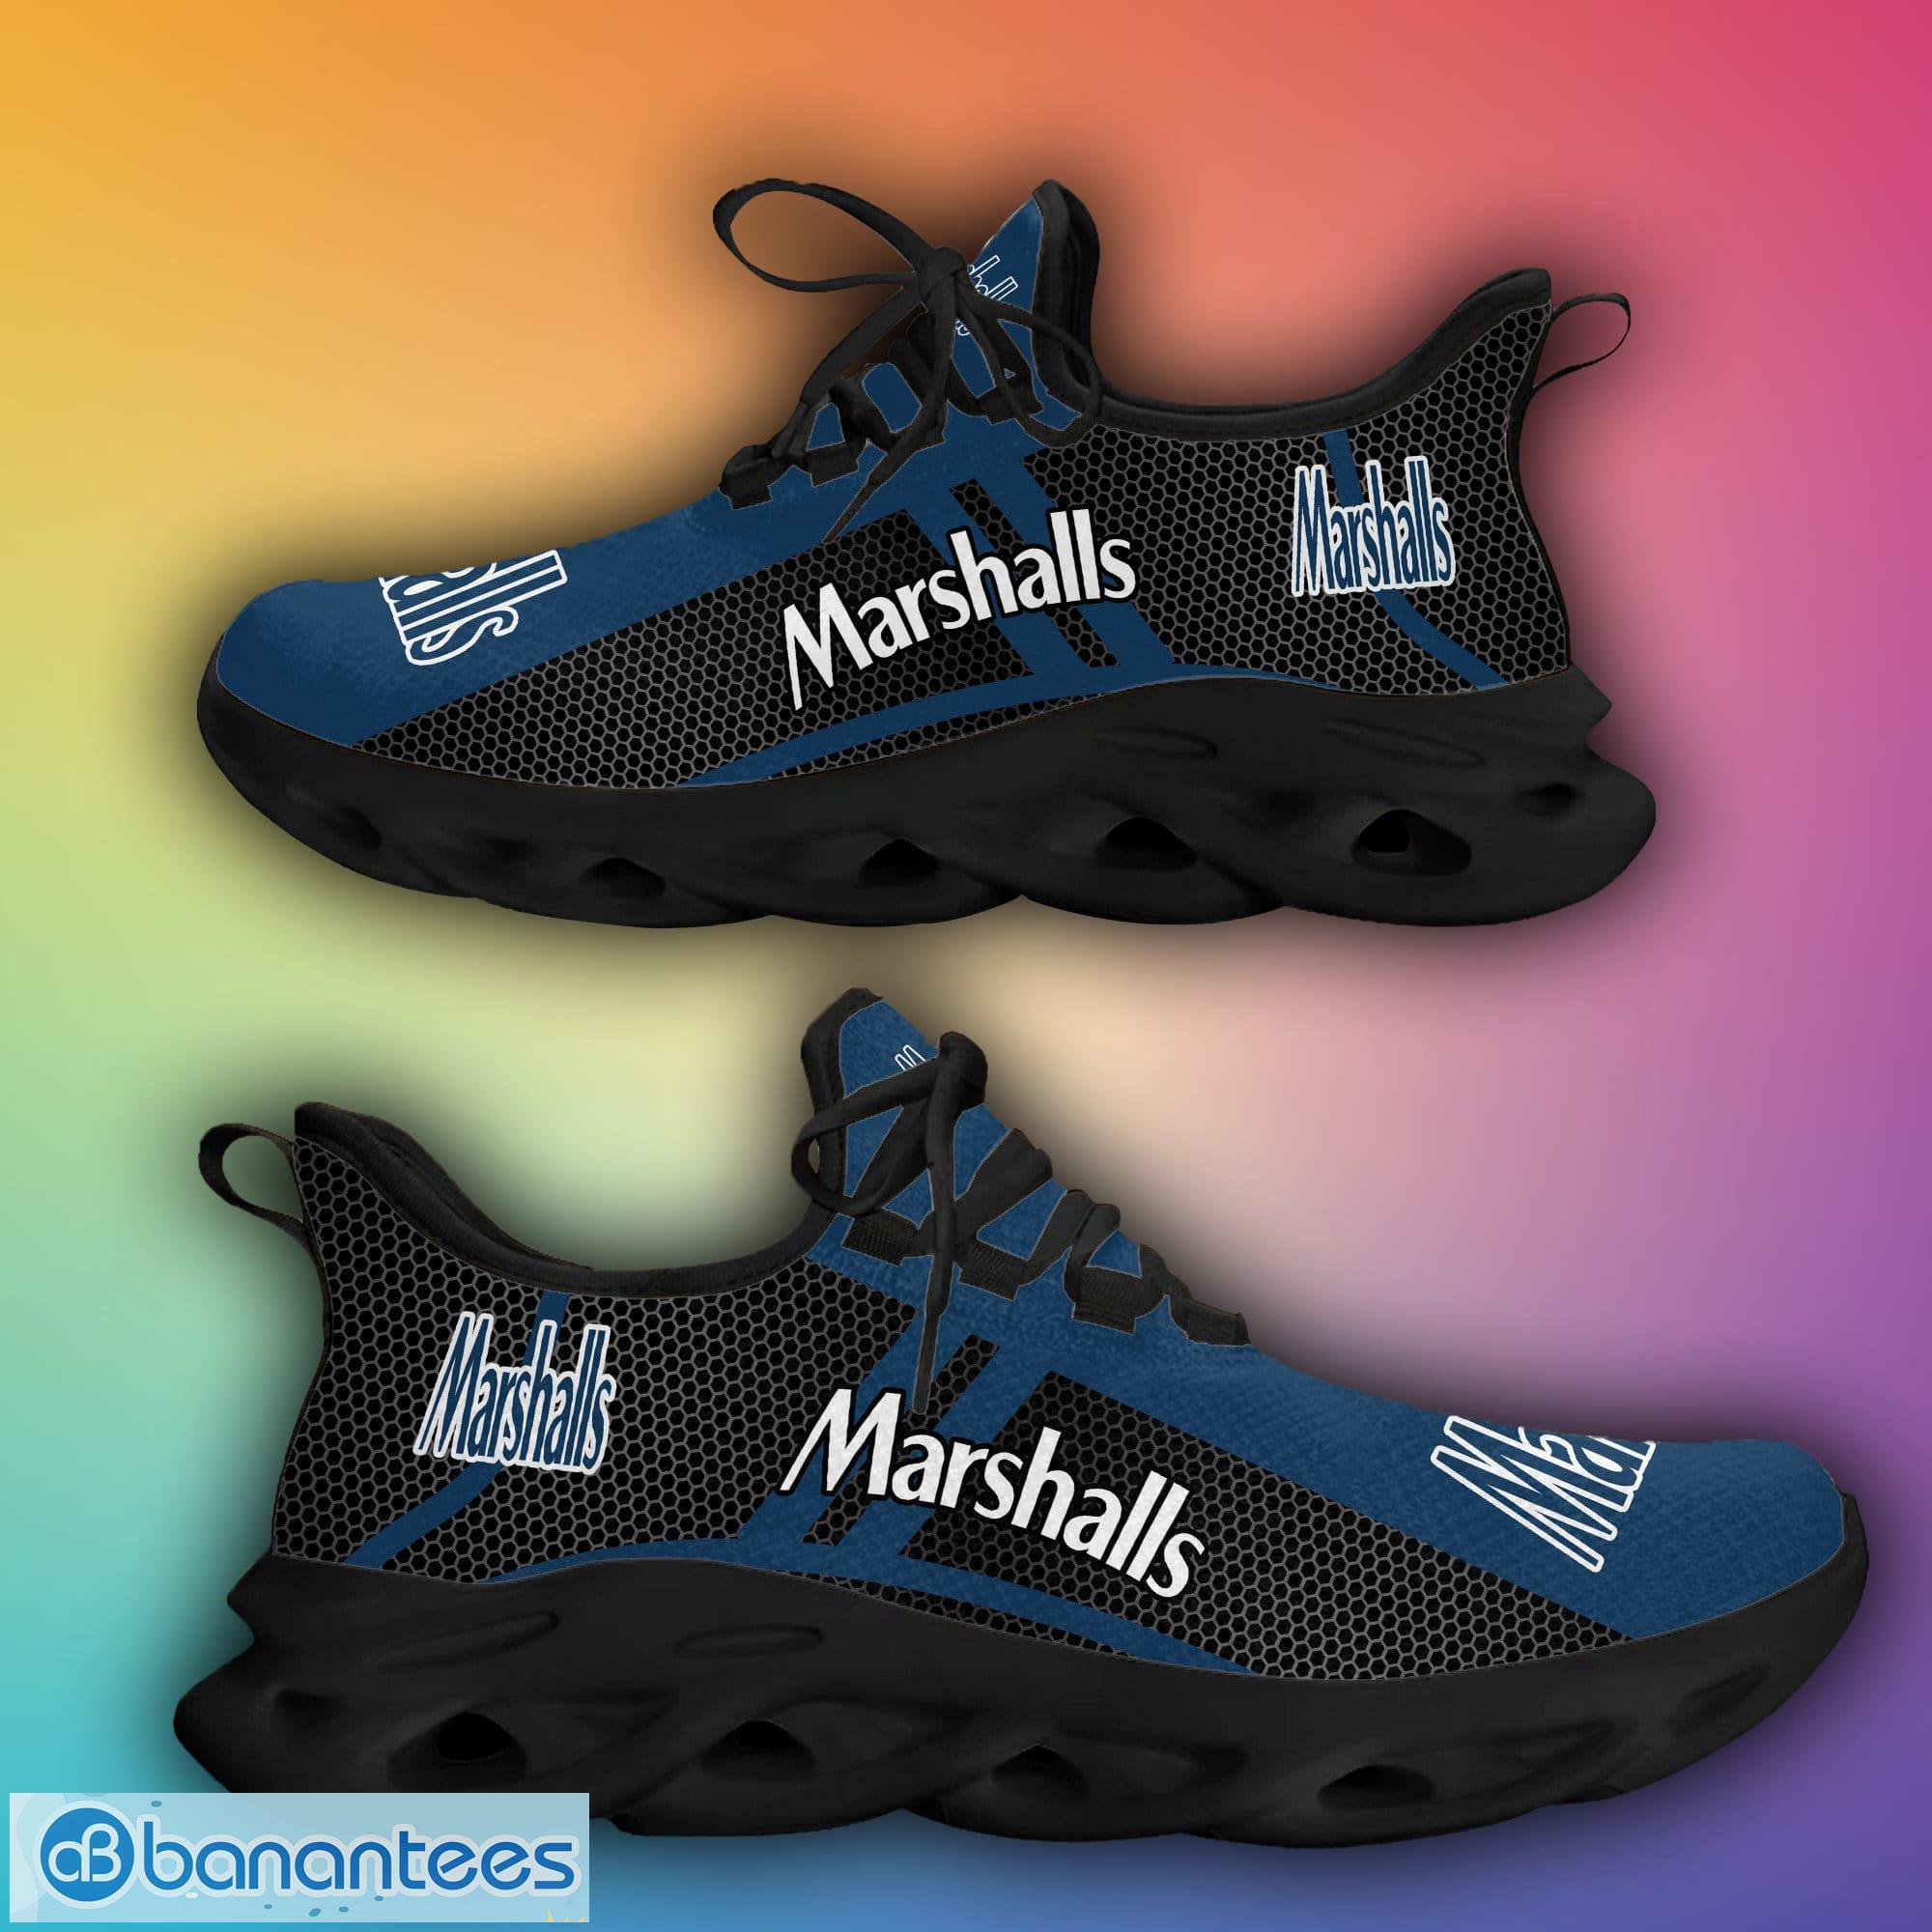 marshalls Logo Chunky Sneakers Branding Max Soul Shoes Gift For Men Women - marshalls Big Logo Max Soul Shoes For Fans_1